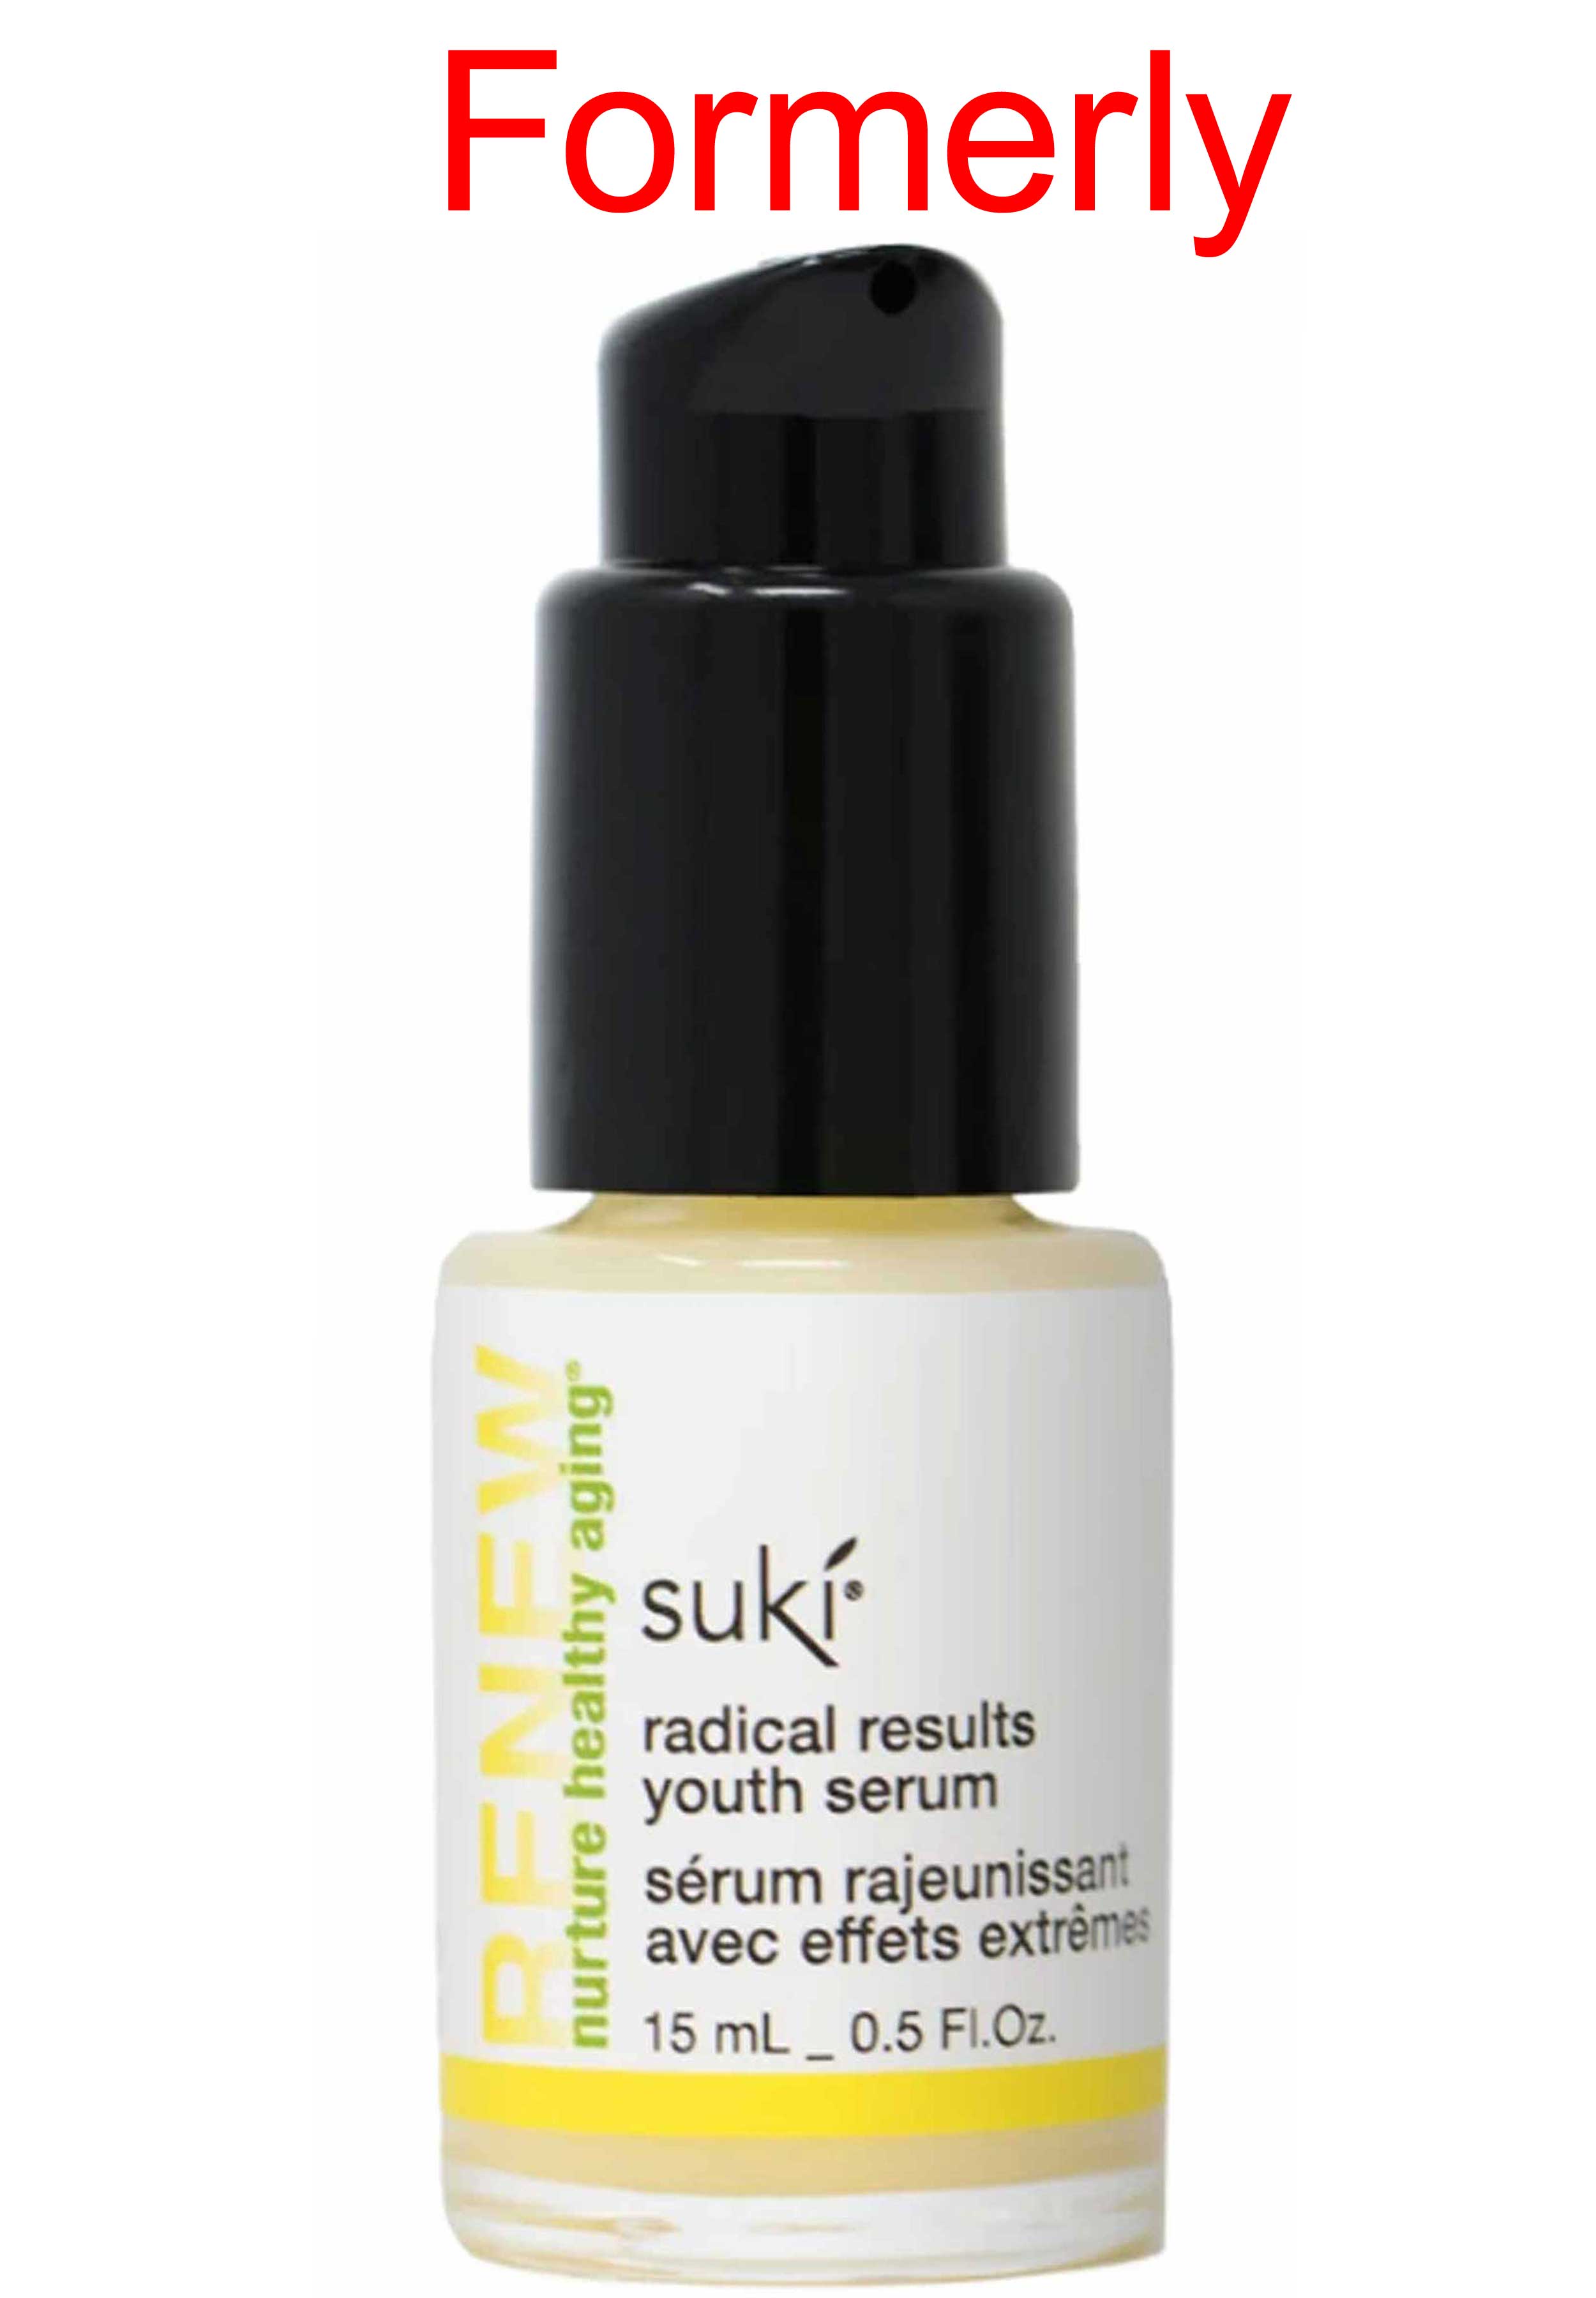 Suki Natural Retinol Serum (Formerly Radical Results Youth Serum) 